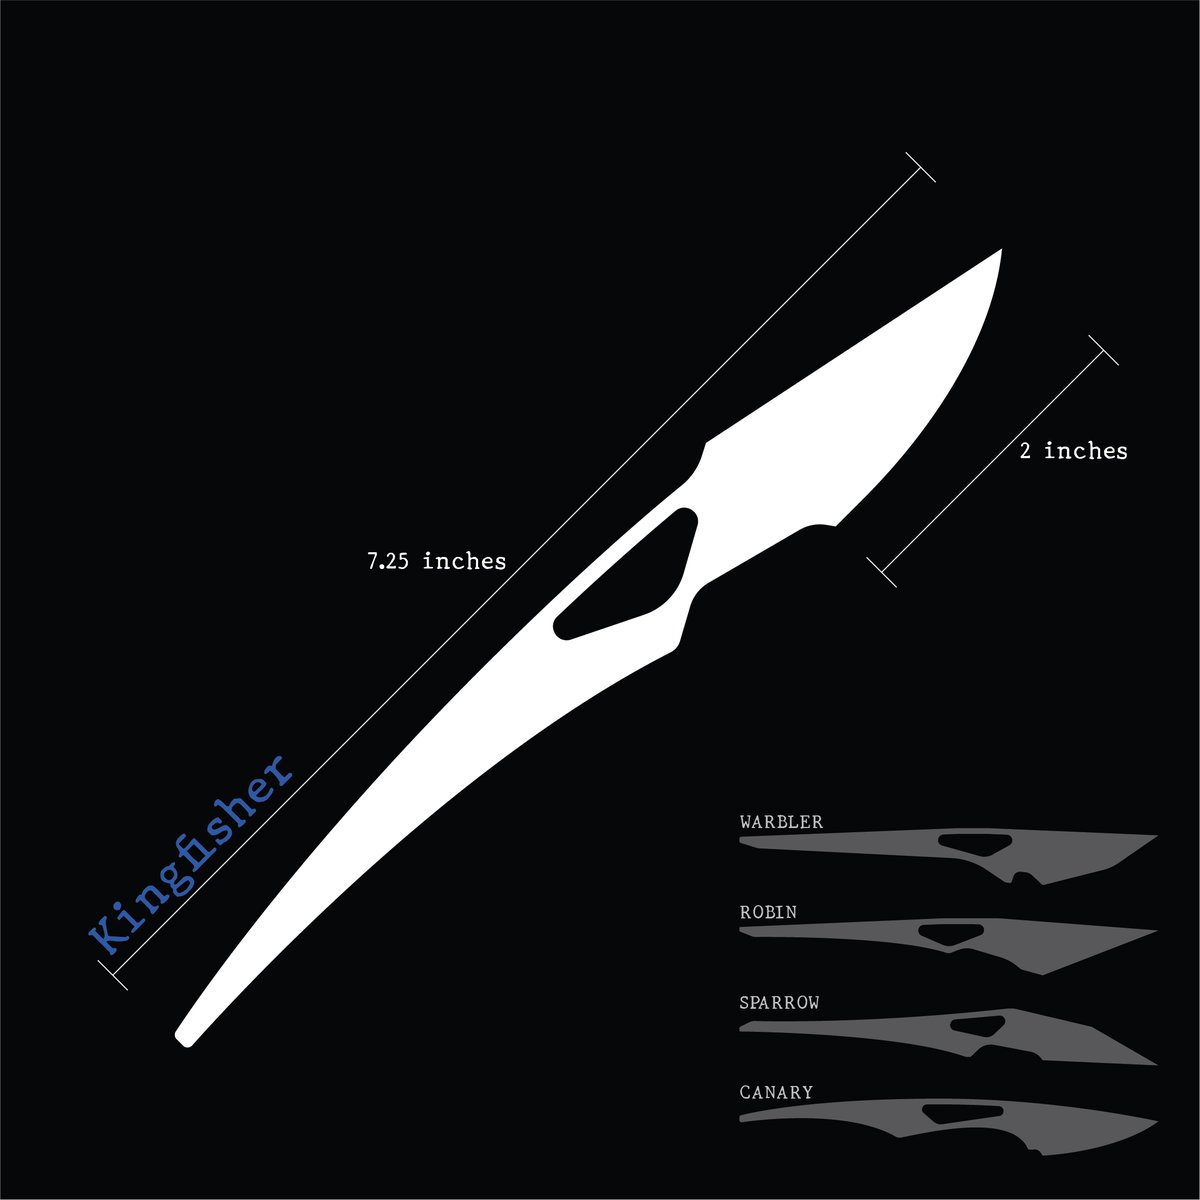 A new member of little bird family ^ ^
'KINGFISHER'
#scalpel -like #kiridashi #concept #design
.
#knife #knives #blade #edc #edcgear #gear #tools #customknives #illustration #conceptdesign #vector #lineart